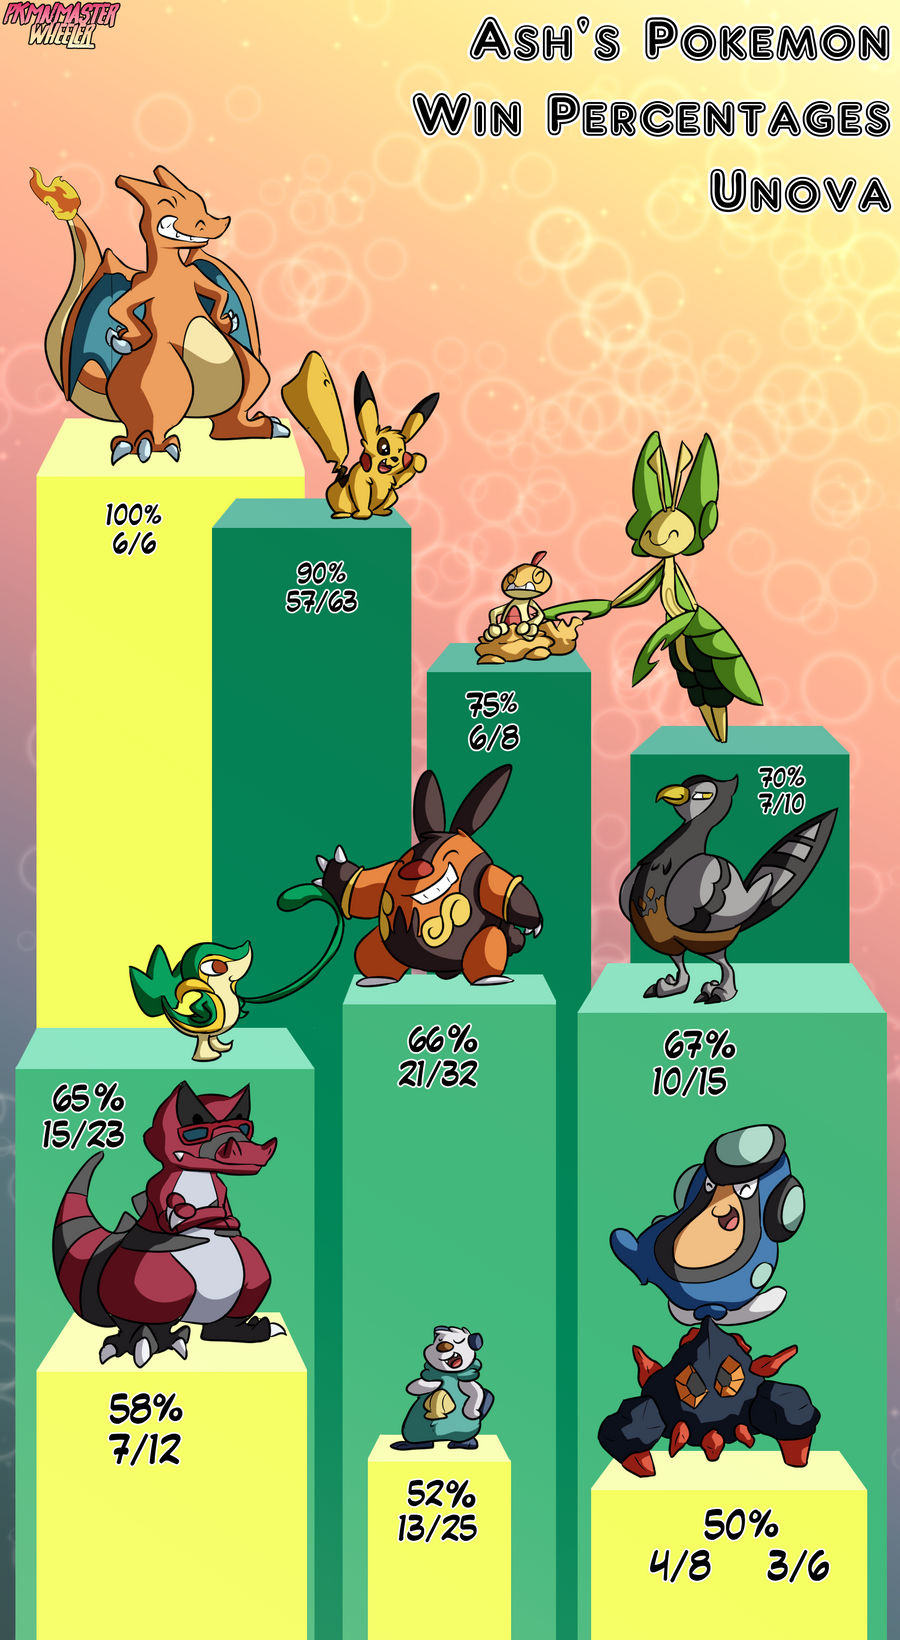 Ash's Pokemon ranking by Win Percentage, Pokémon